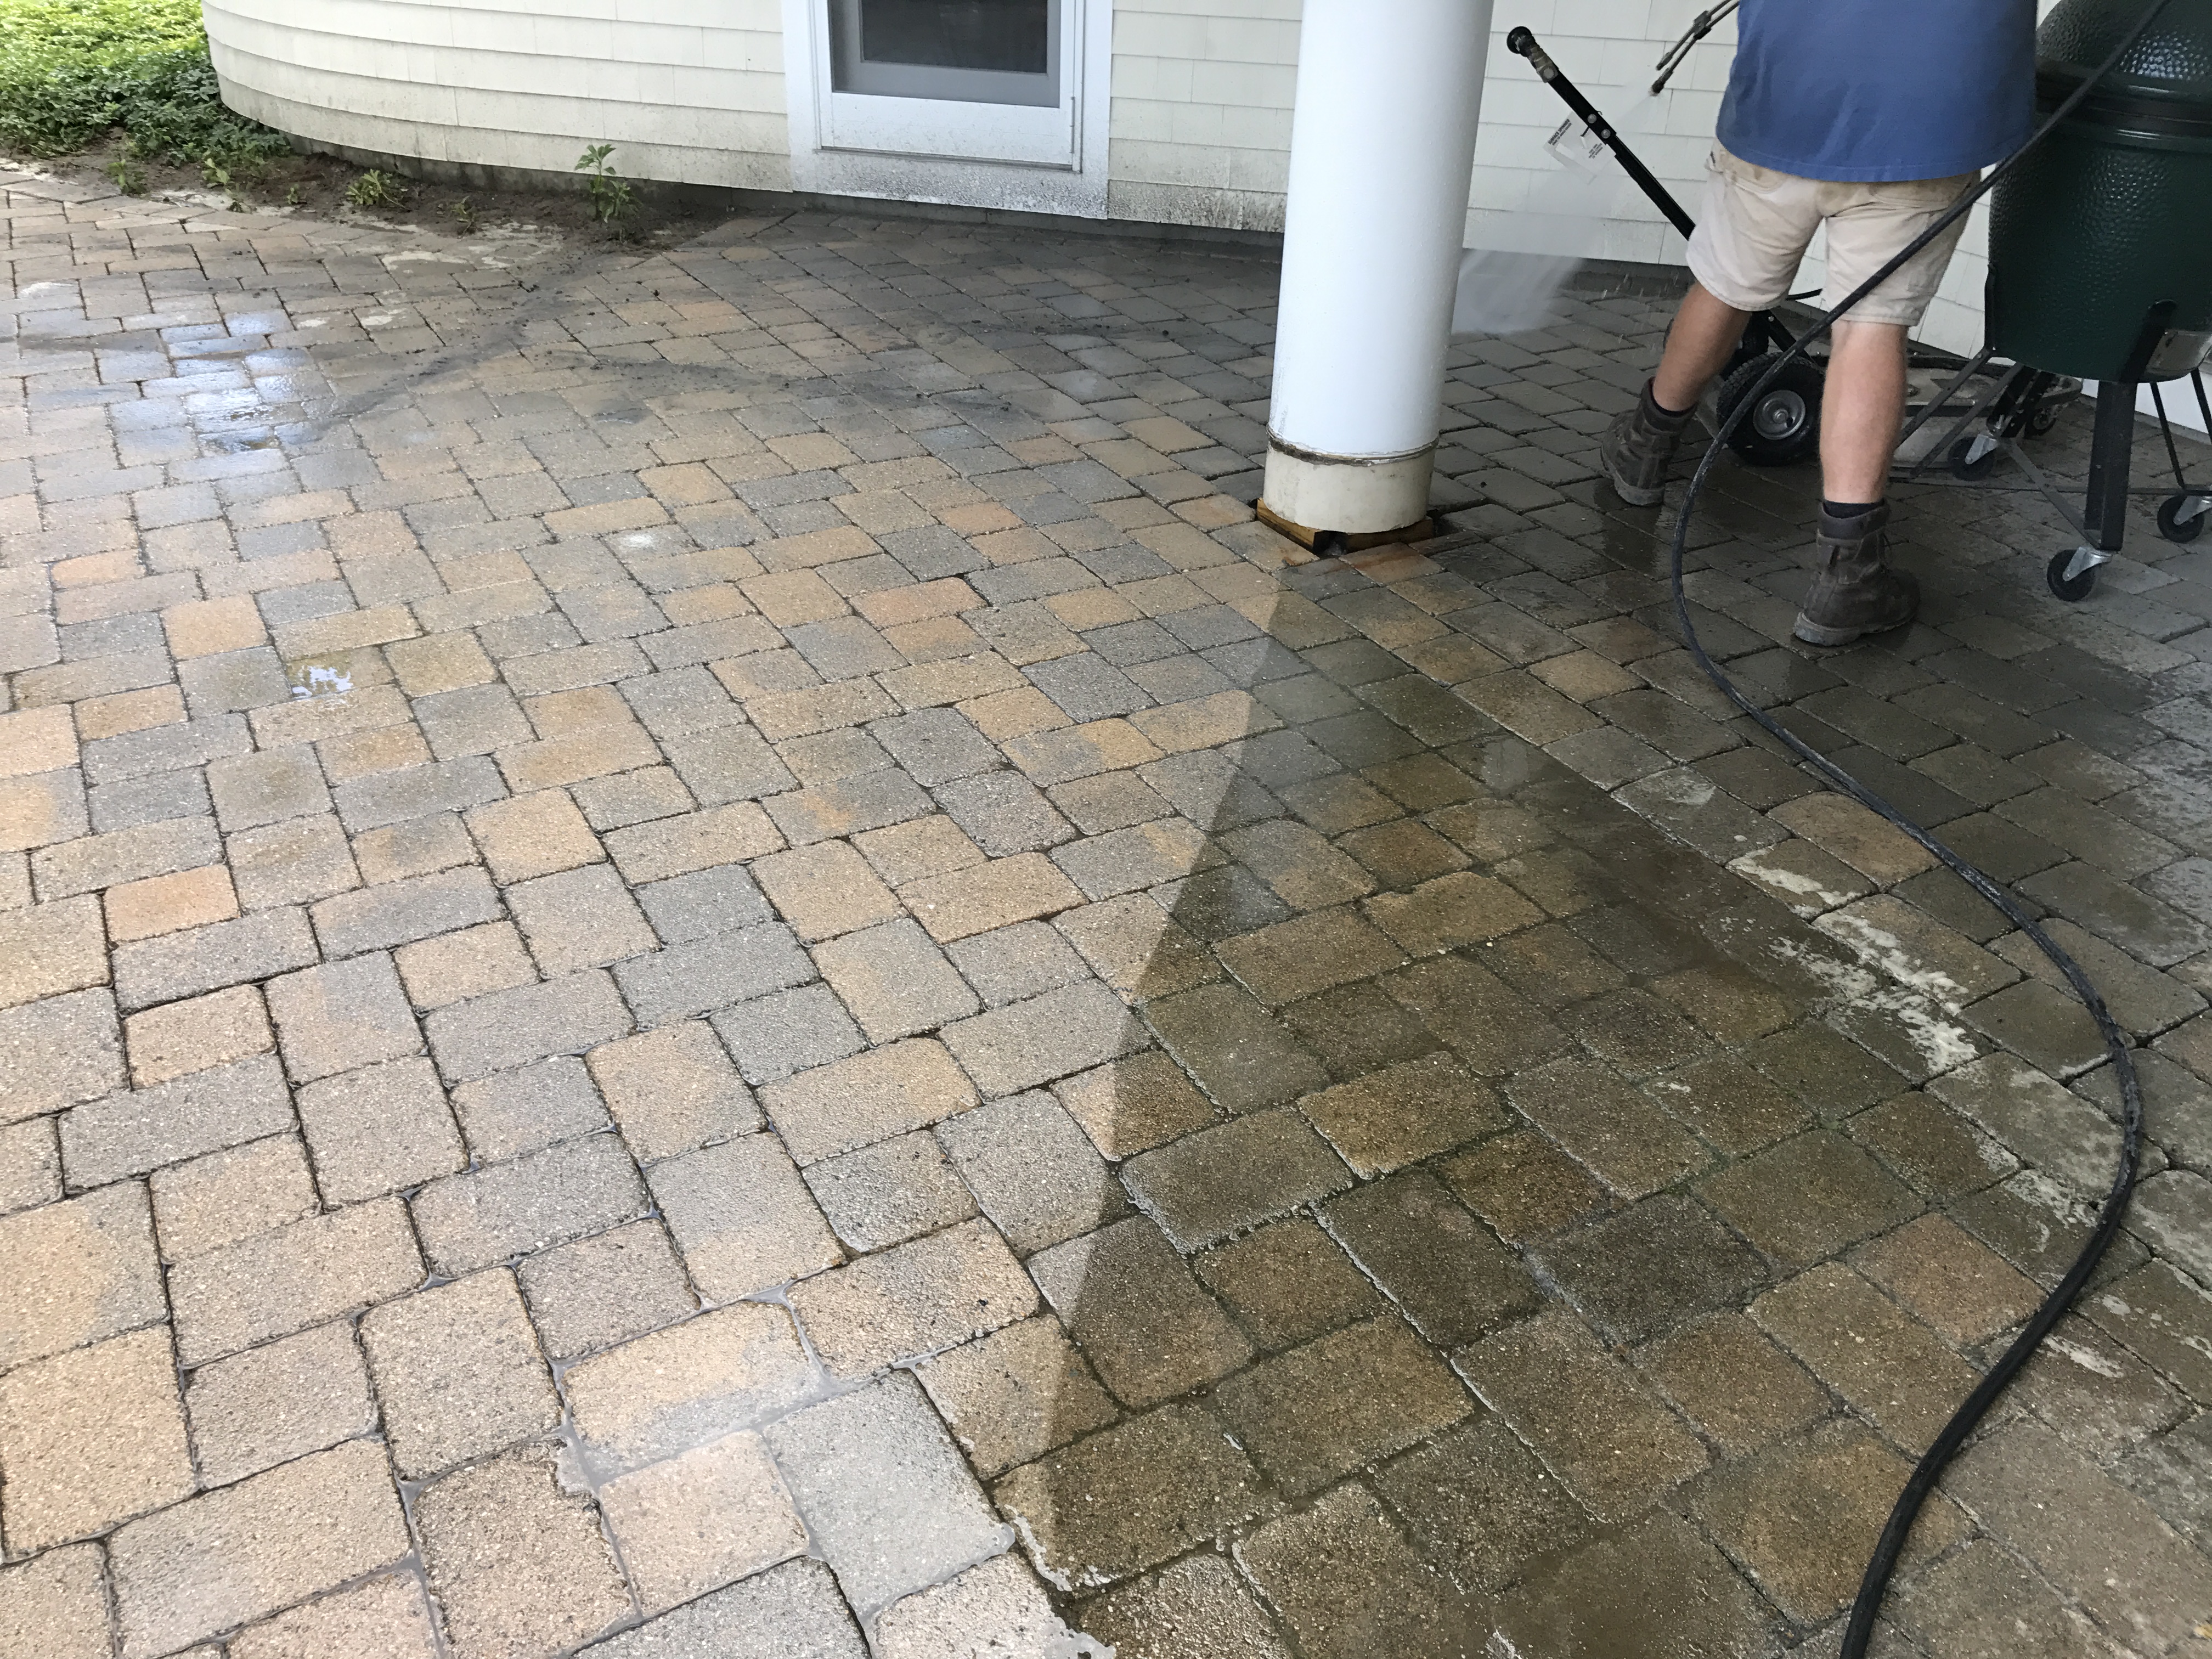 https://0201.nccdn.net/4_2/000/000/06b/a1b/patio-cleaning-half-and-half.jpg